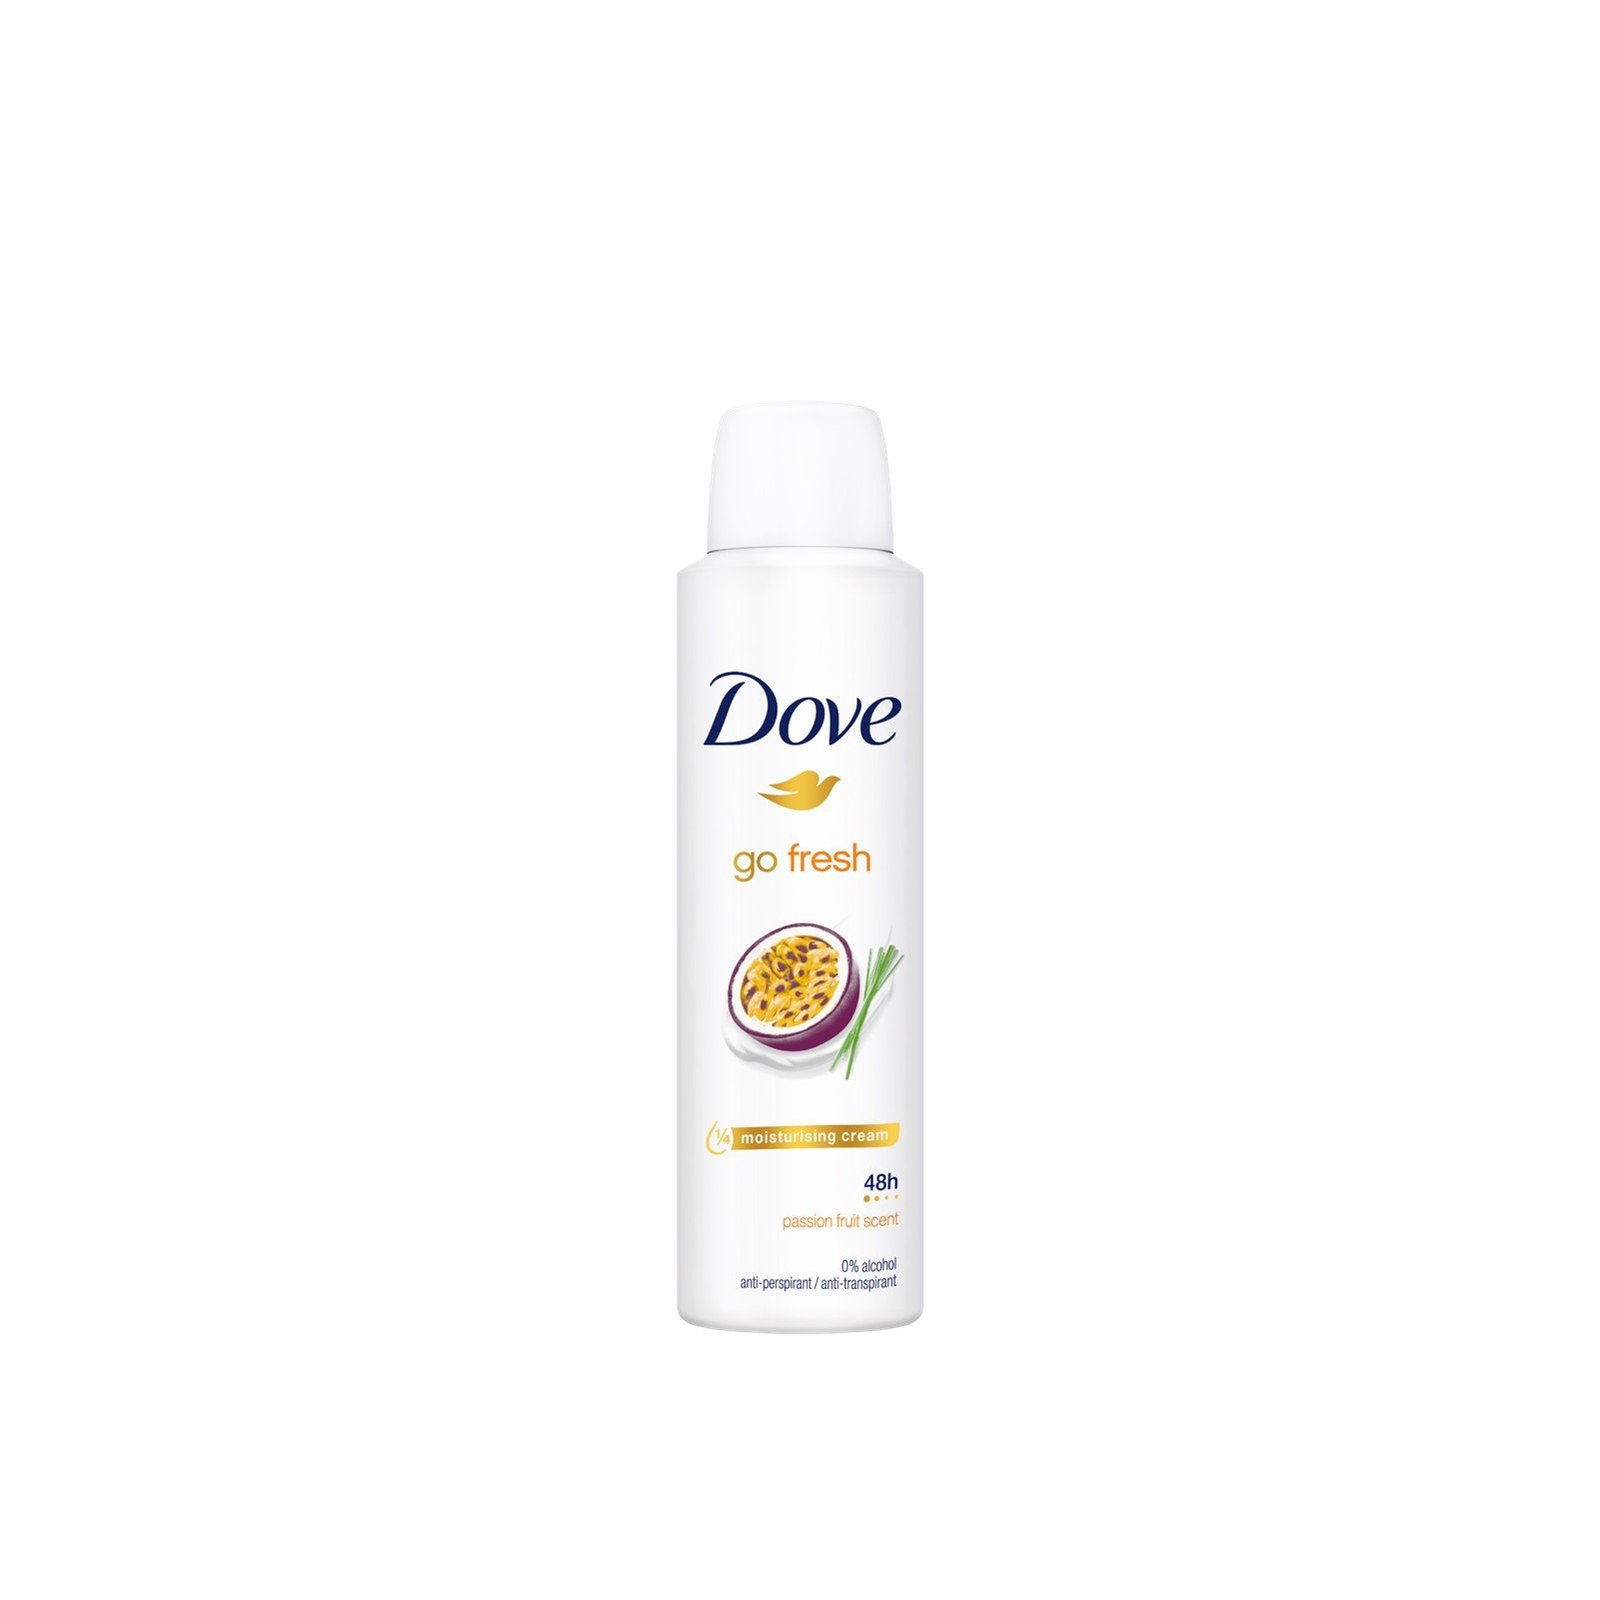 Dove Go Fresh Passion Fruit Scent 48h Anti-Perspirant Deodorant Spray 150ml (5.07 fl oz)